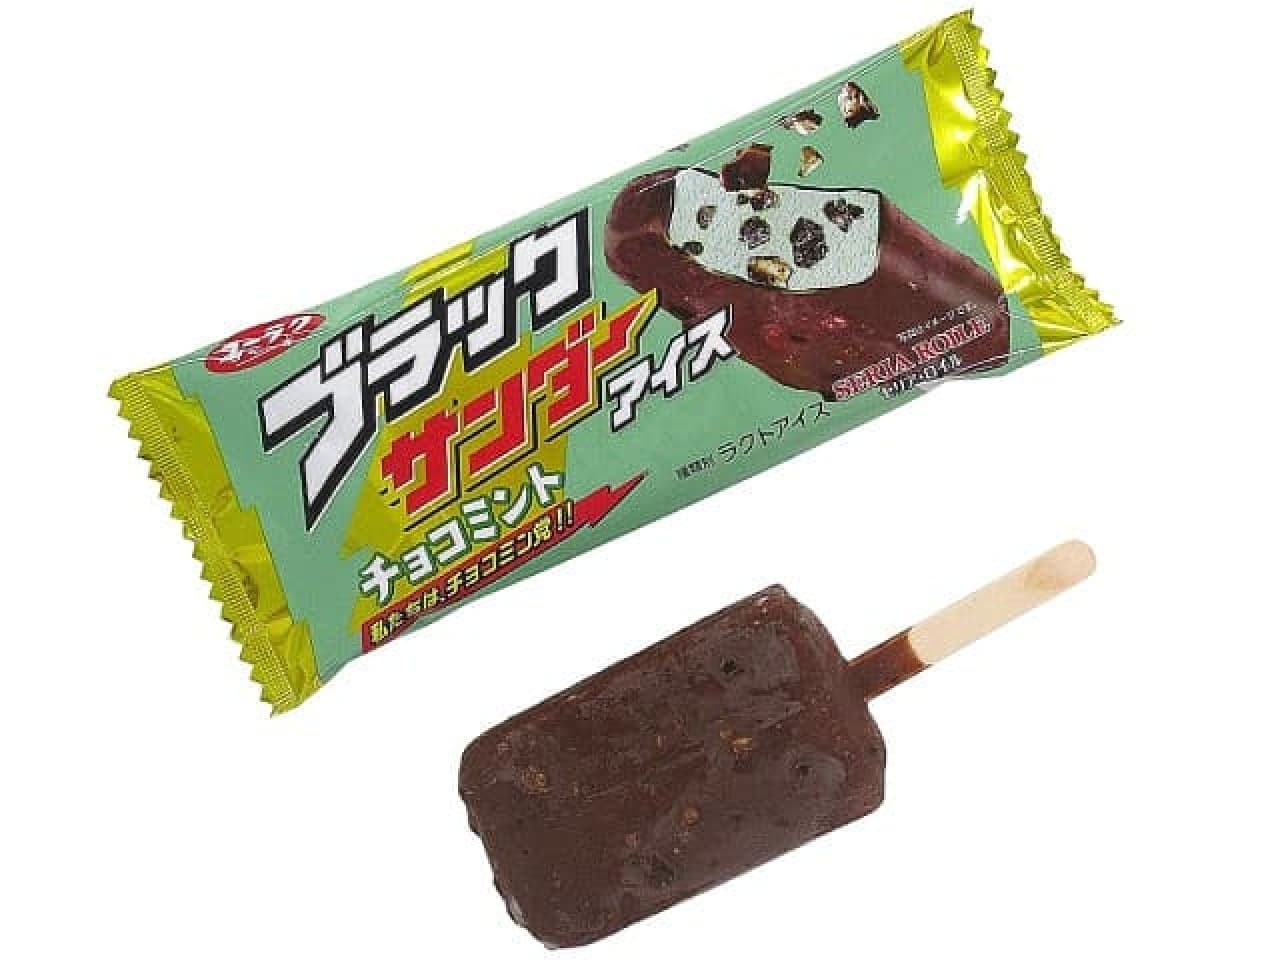 7-Eleven "Seria Royle Black Thunder Choco Mint Ice Cream"